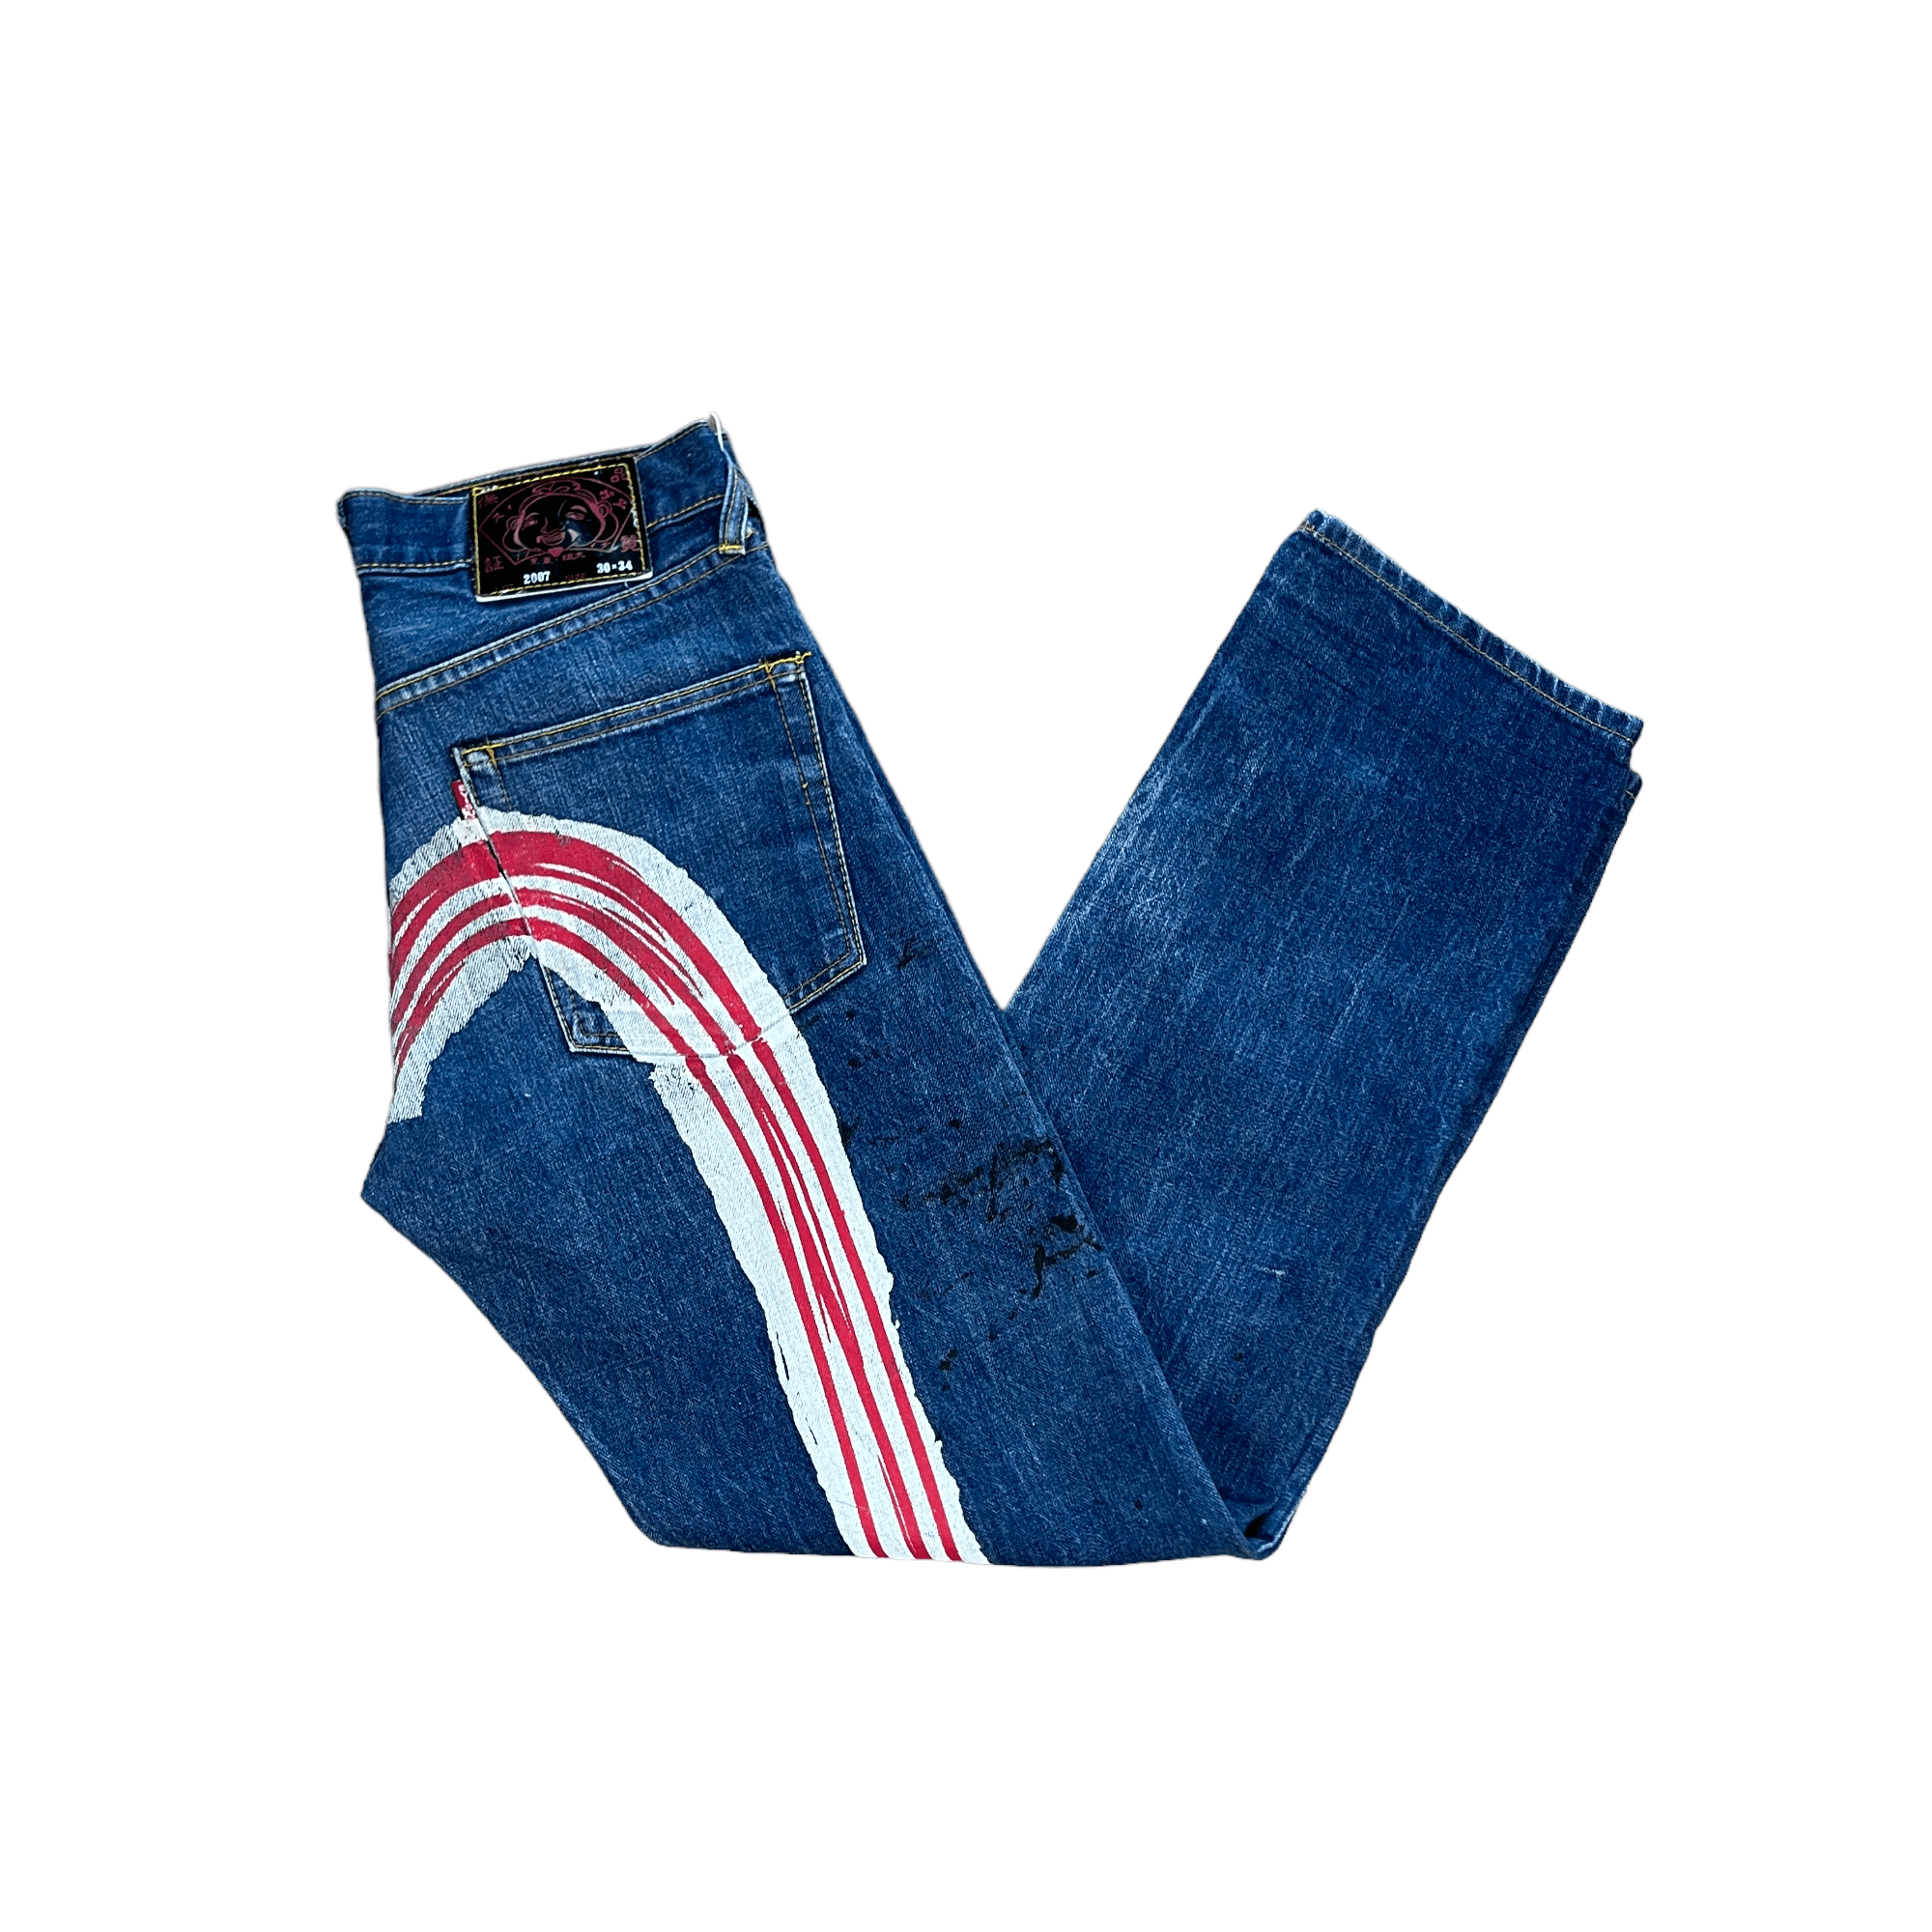 Vintage Evisu Jeans - 30” x 34”